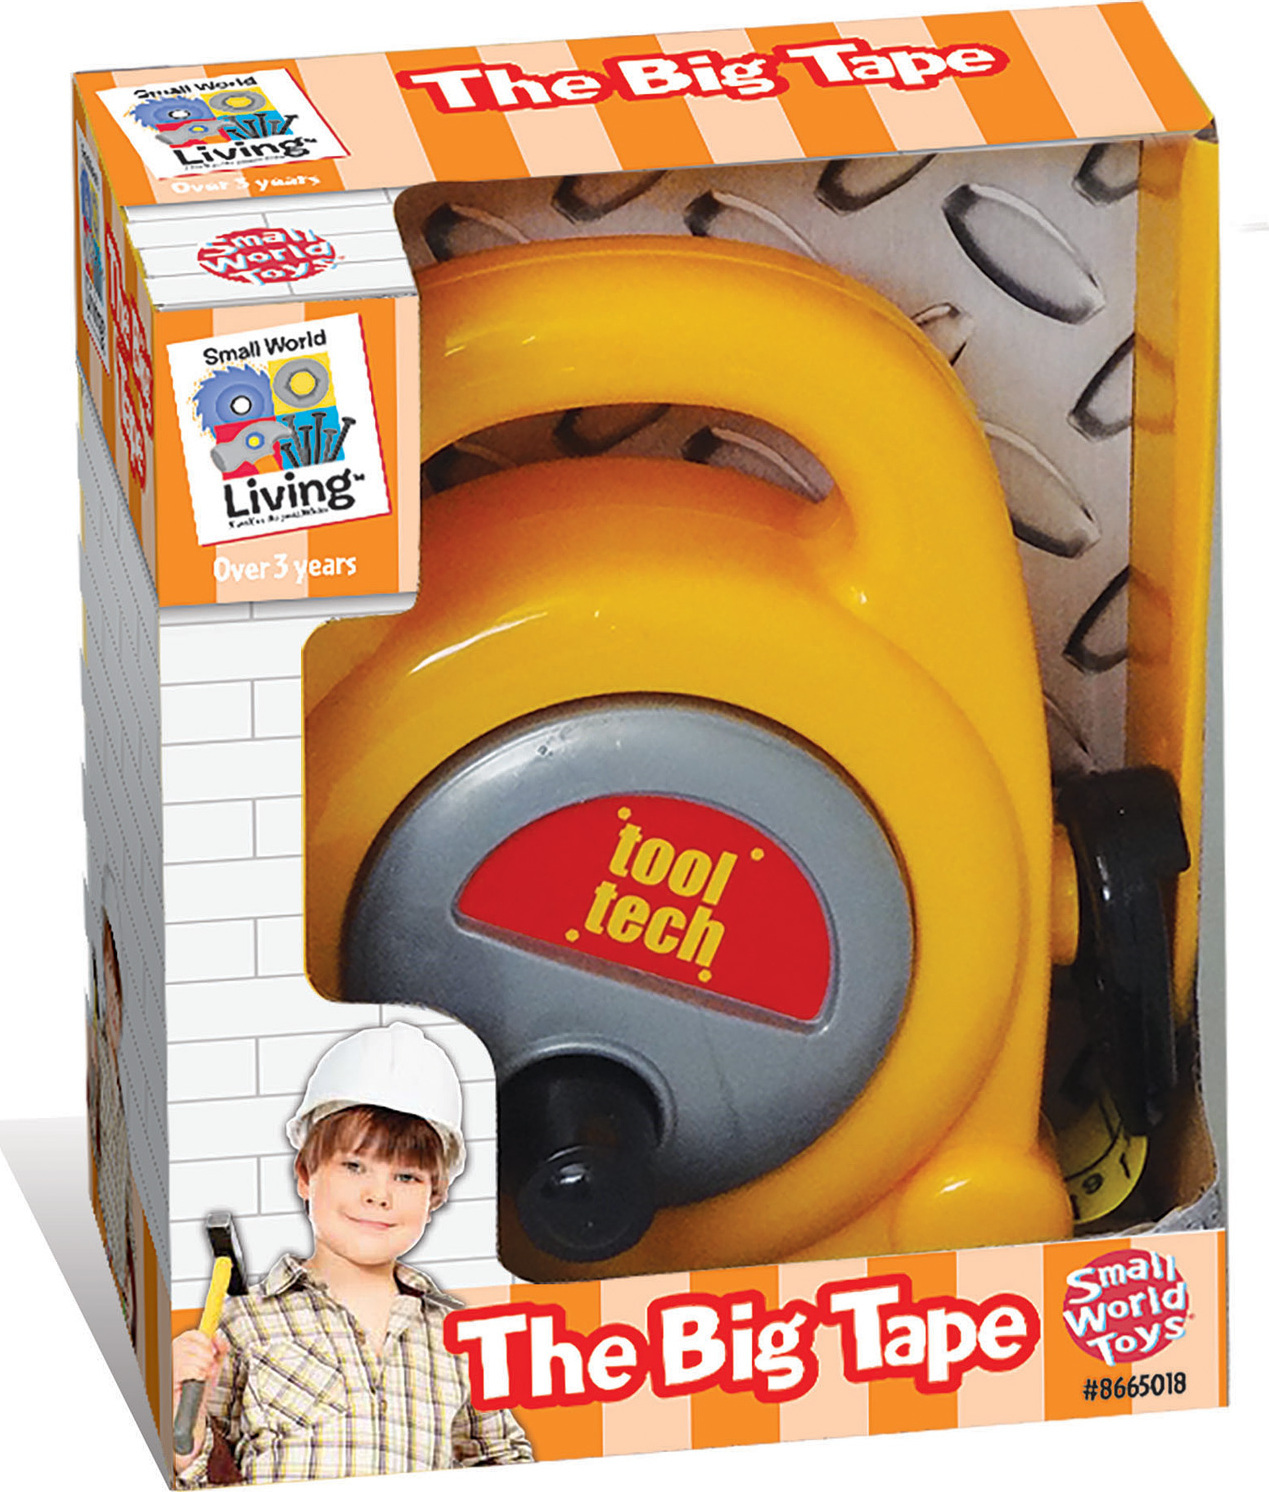 The Big Tape measure for kids - Playthings Aplenty